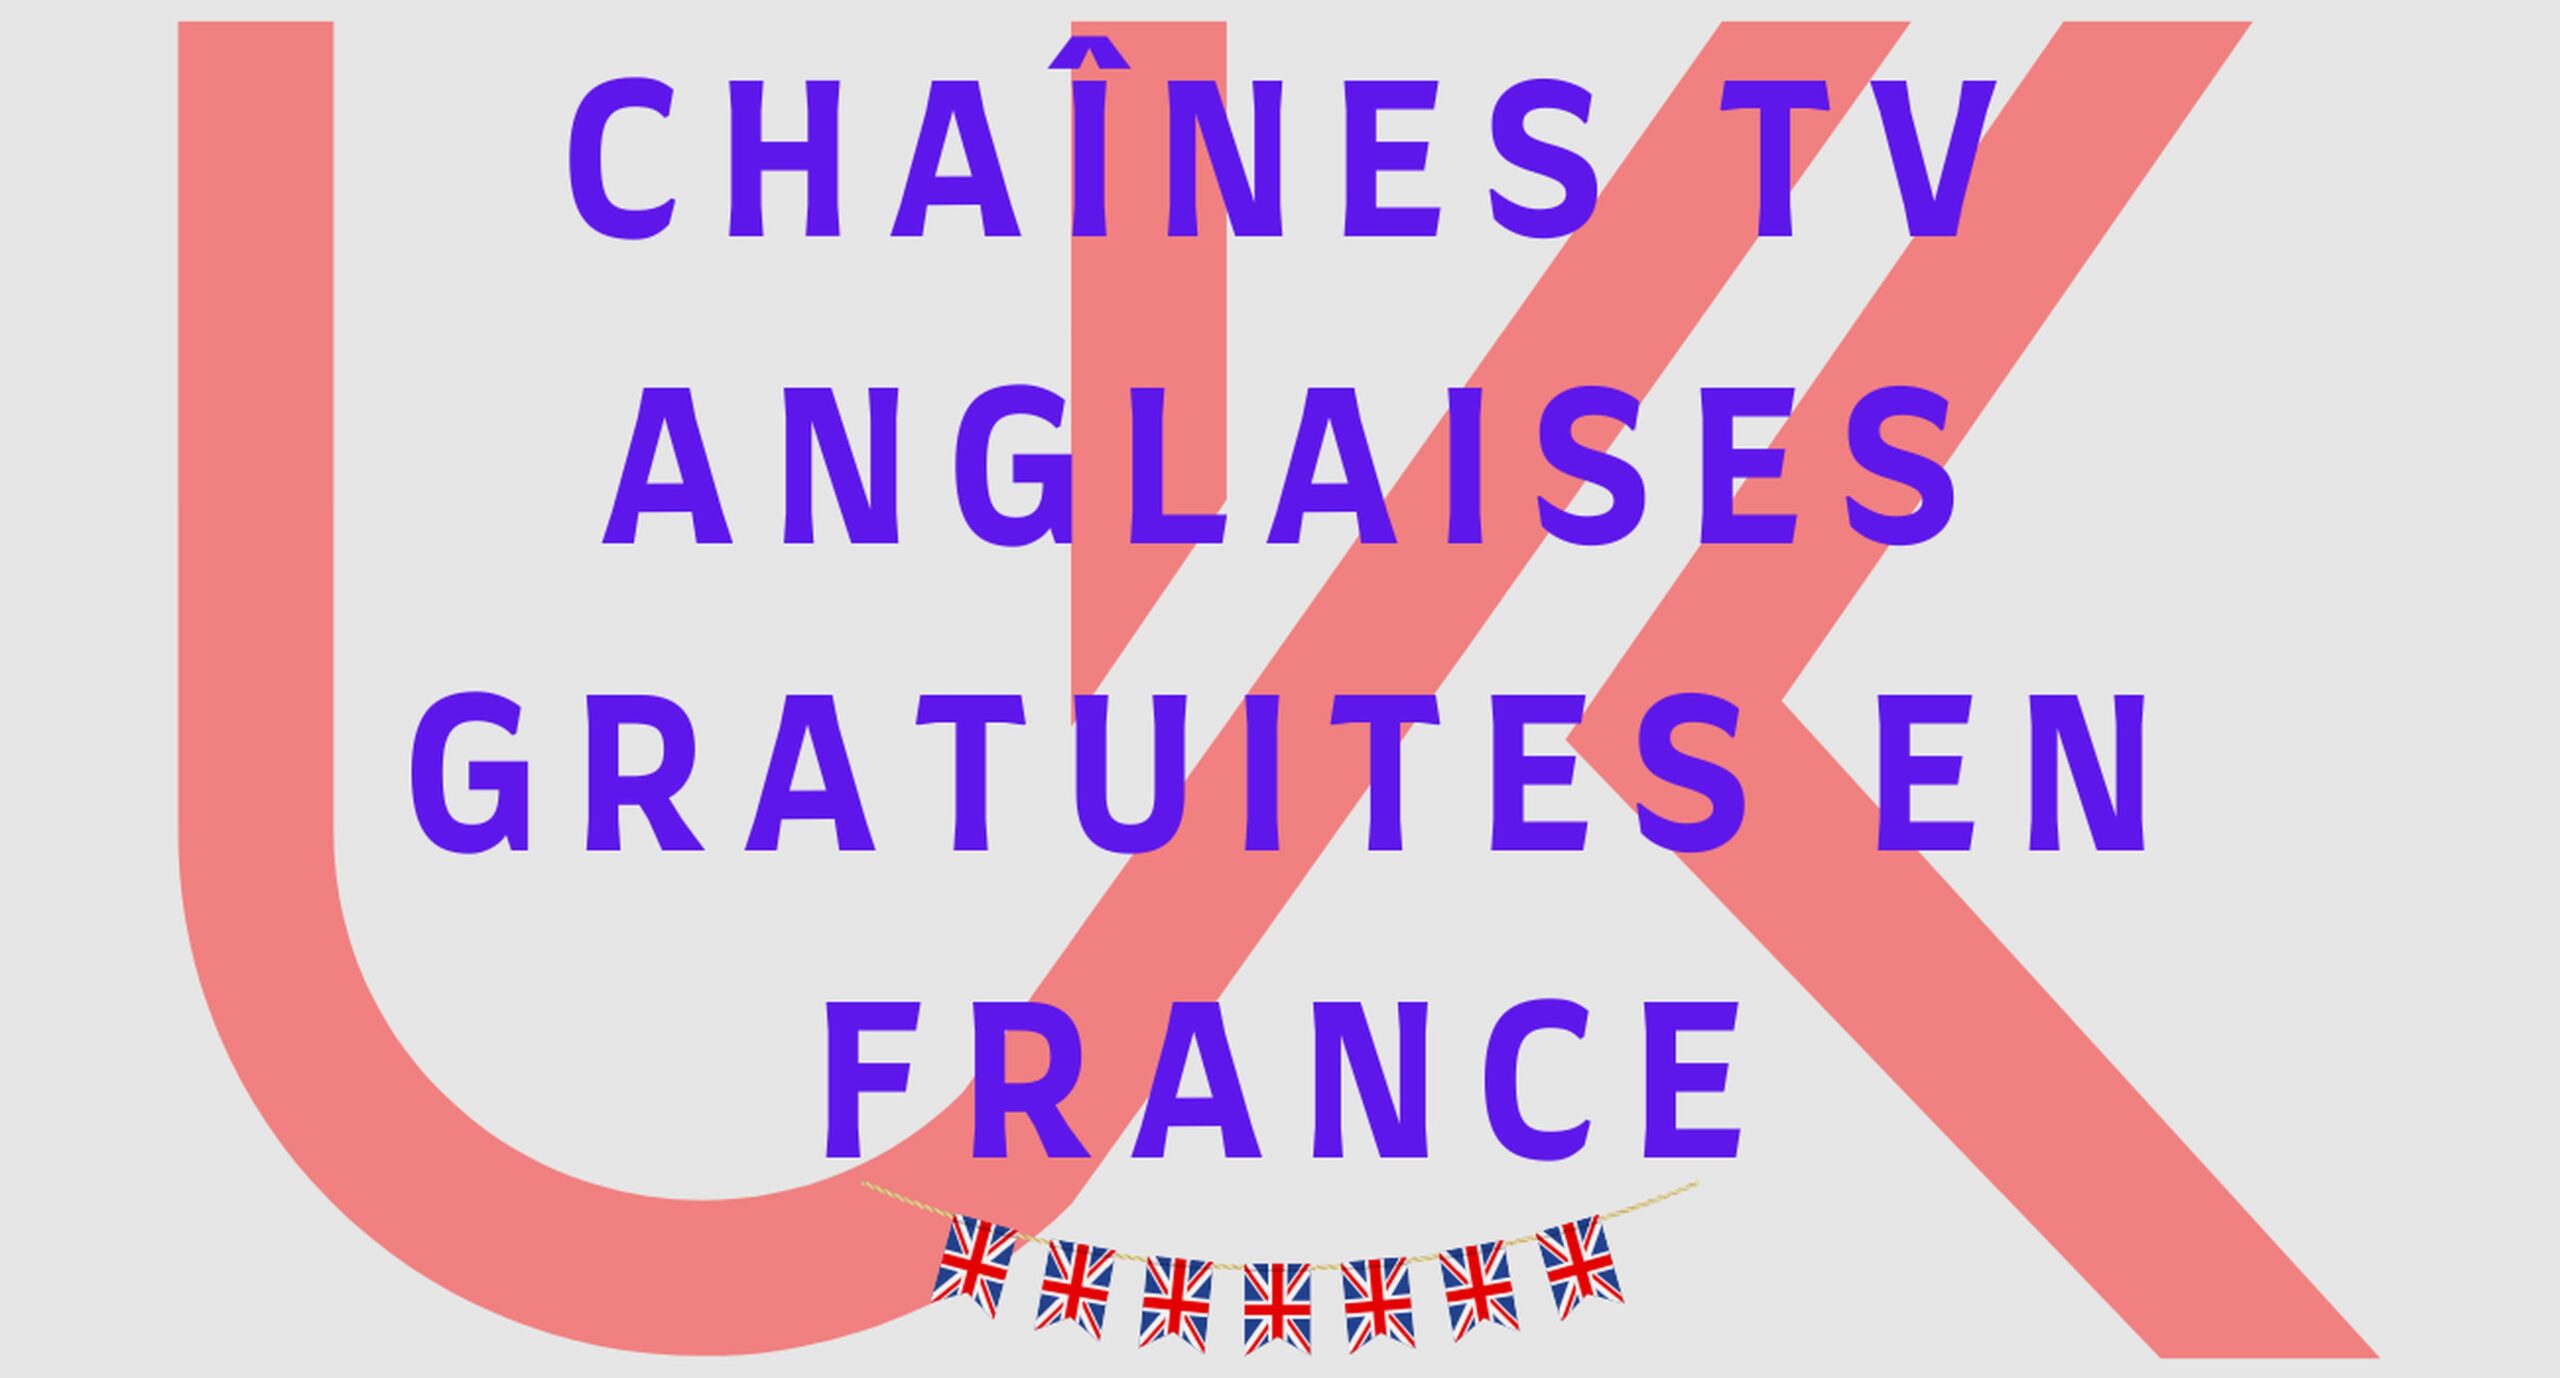 Chaînes TV Anglaises gratuites en France - 55 Chaînes TV disponibles 7